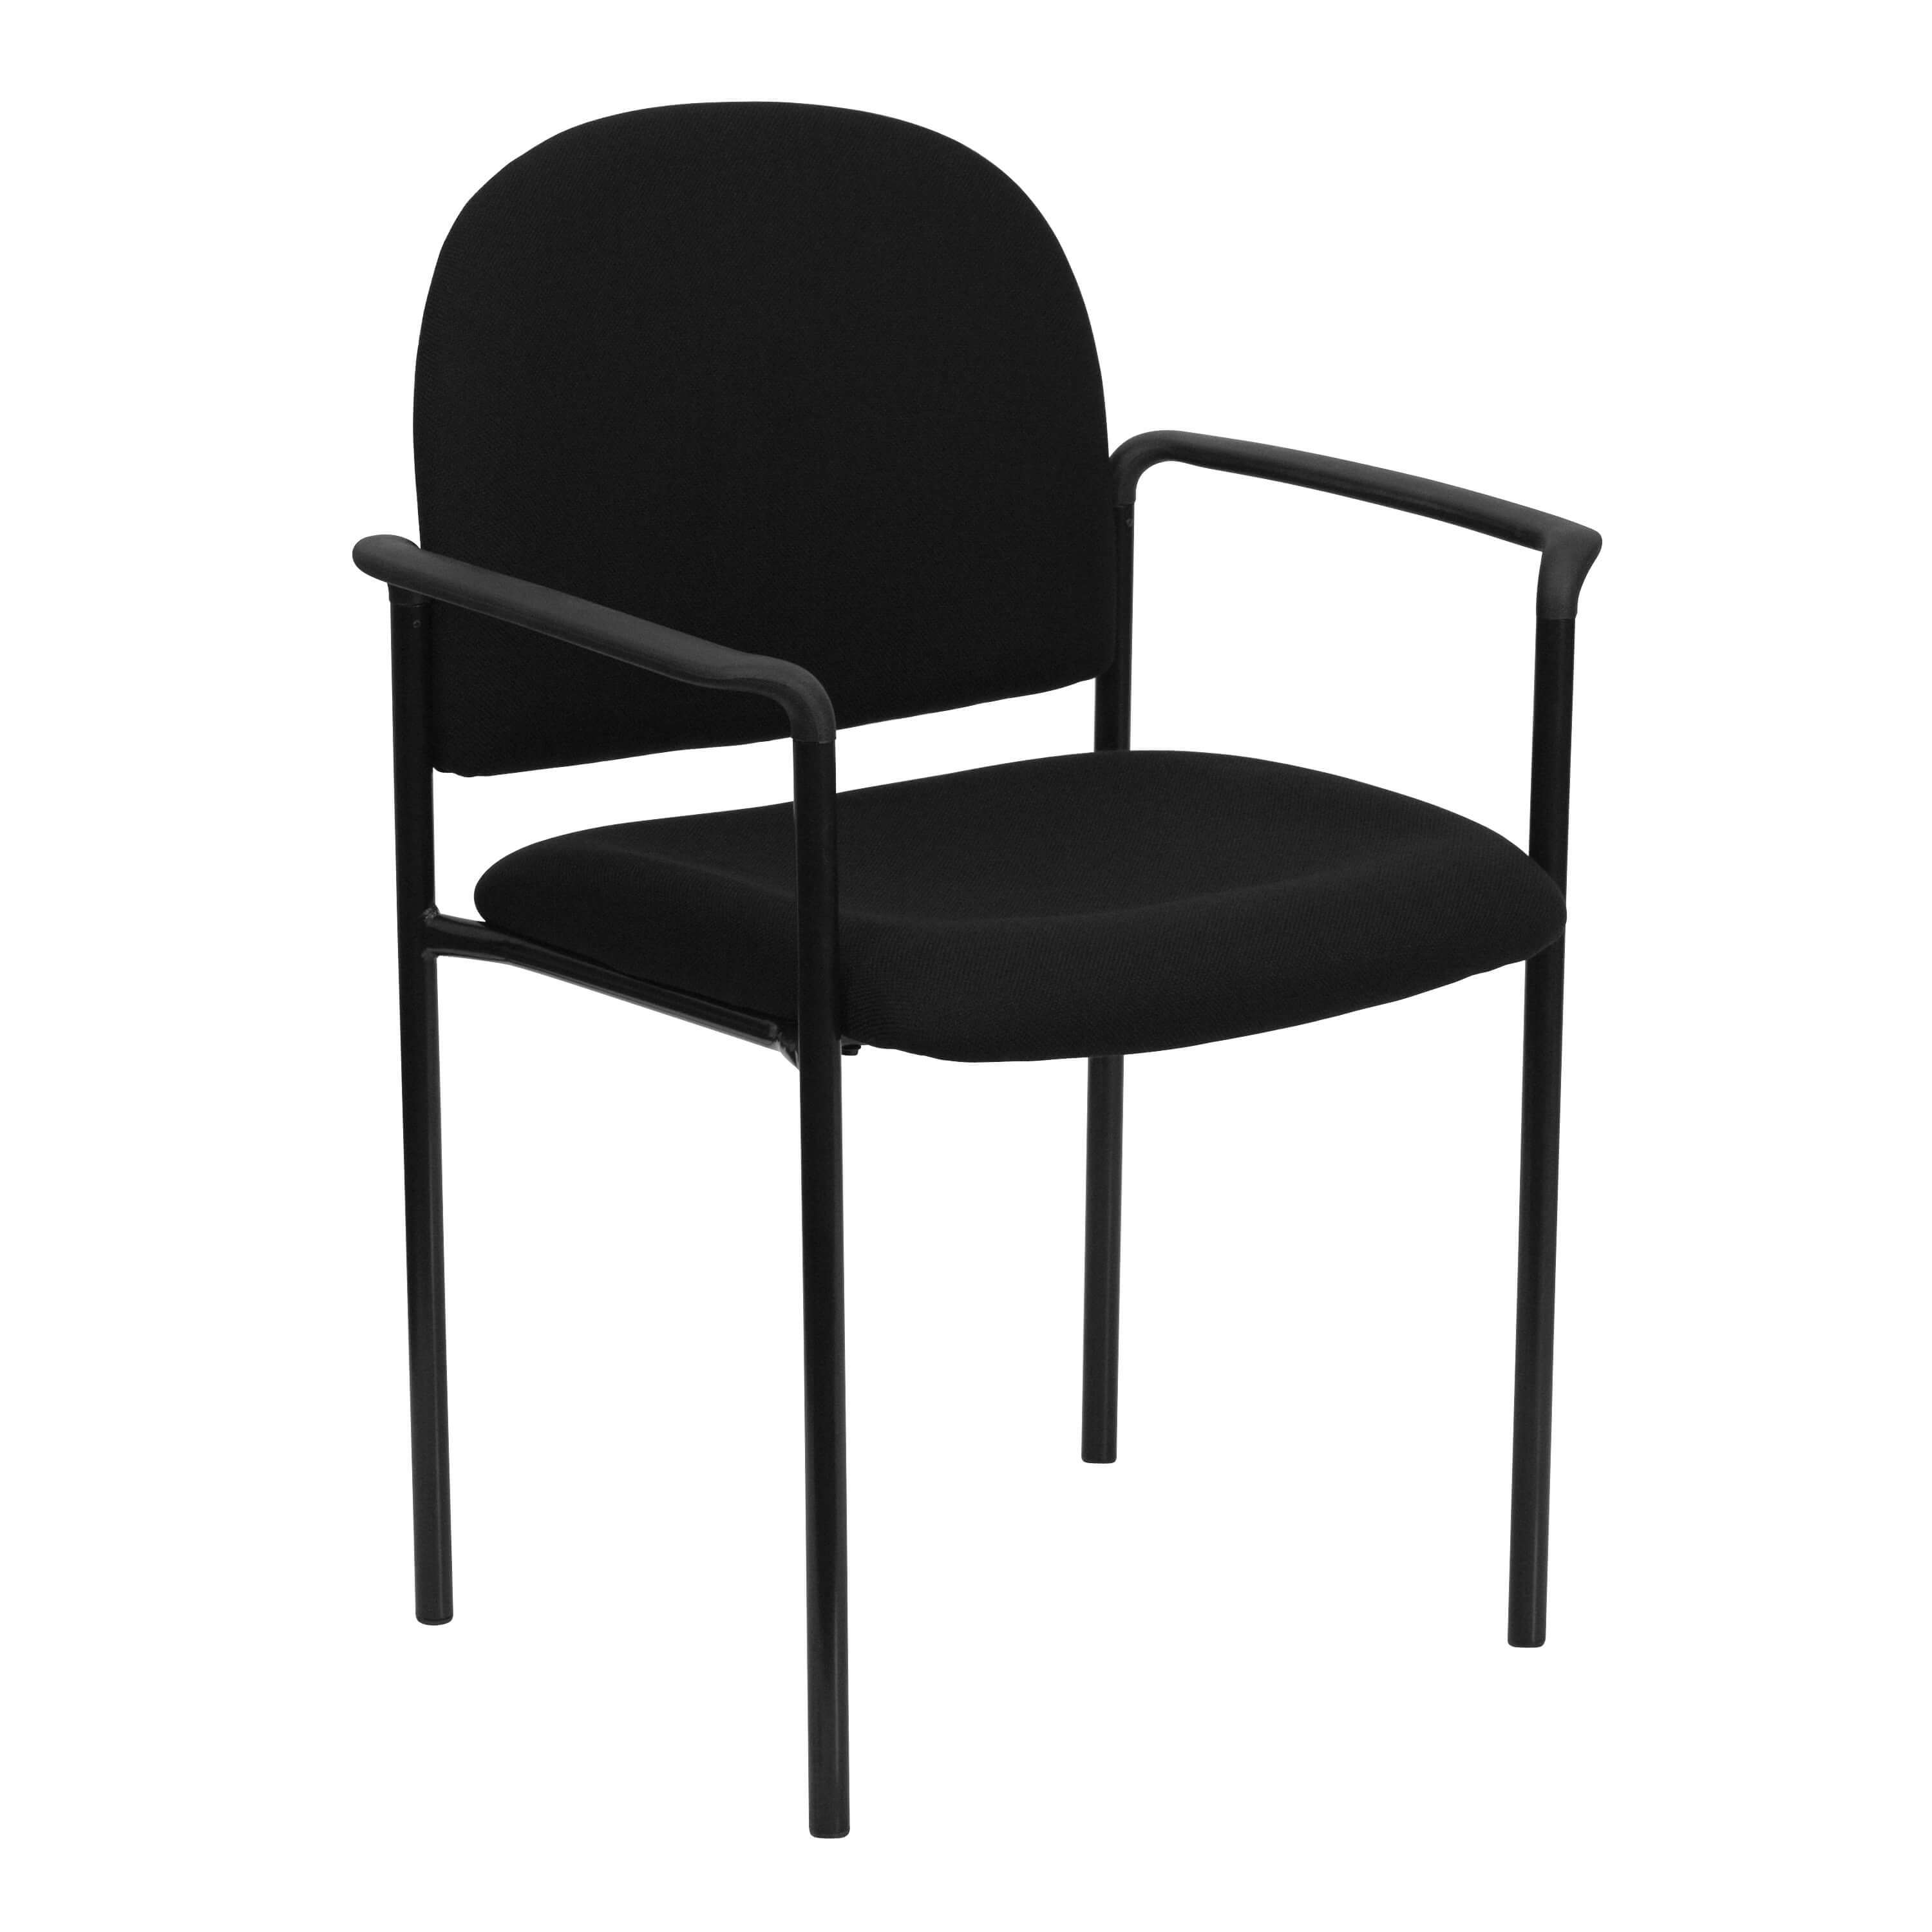 Stackable chairs CUB BT 516 1 BK GG FLA